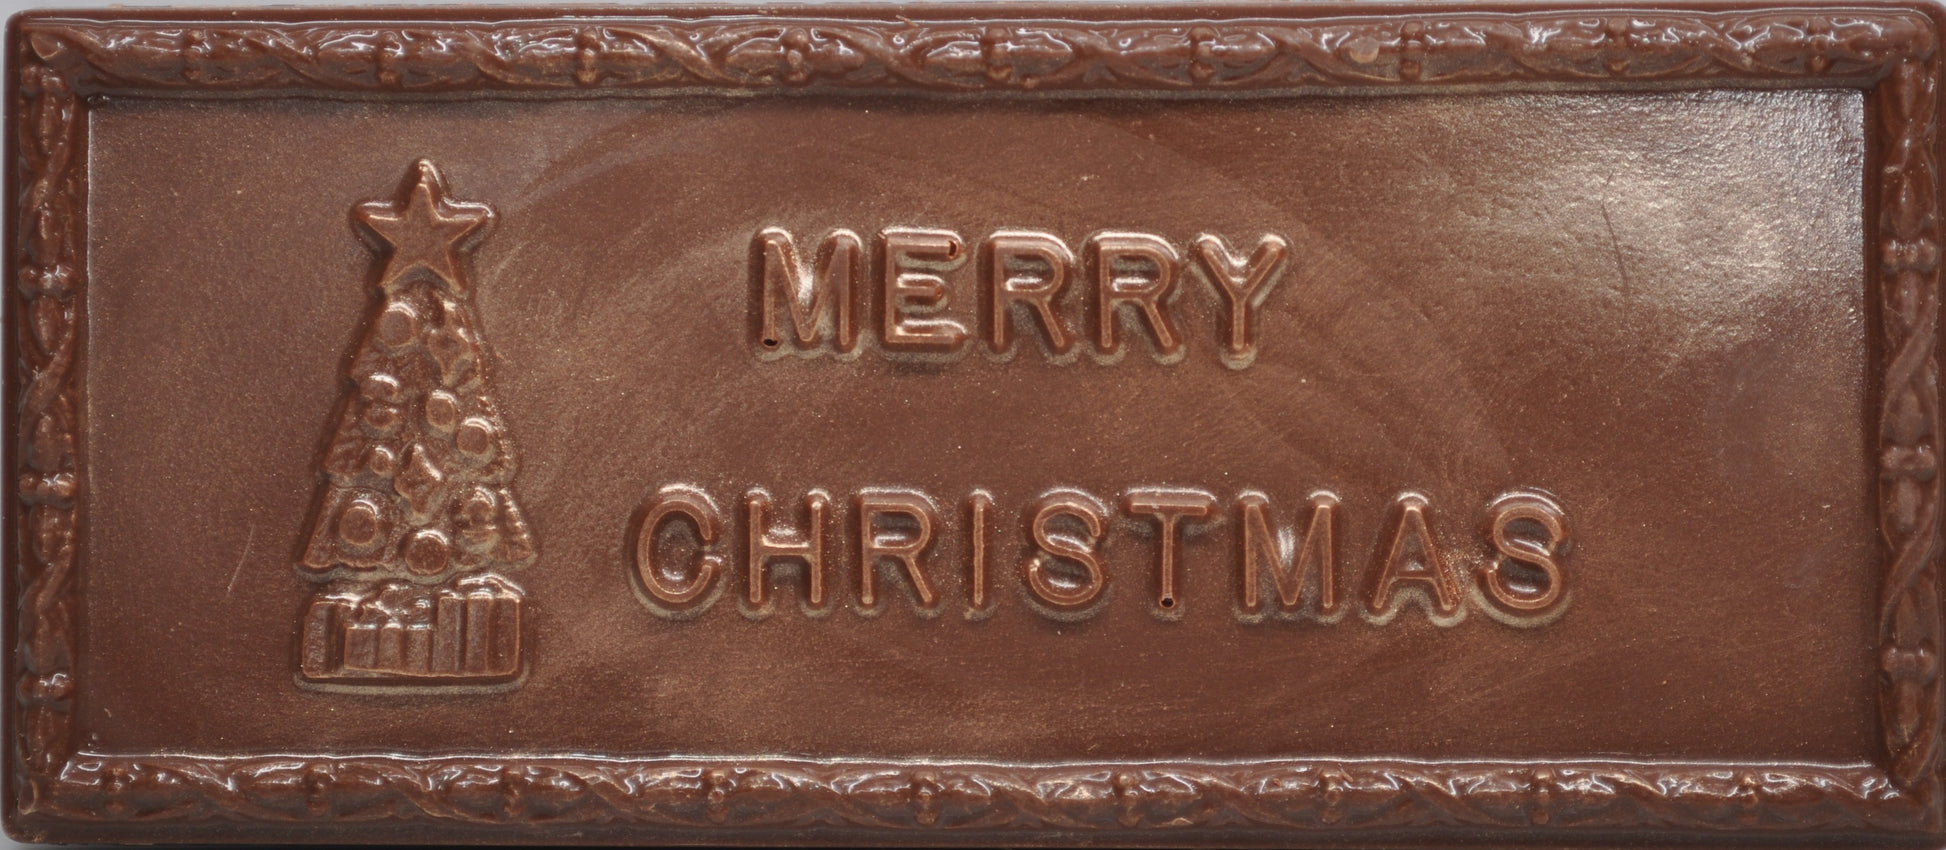 Merry Christmas Bar - Dark Chocolate